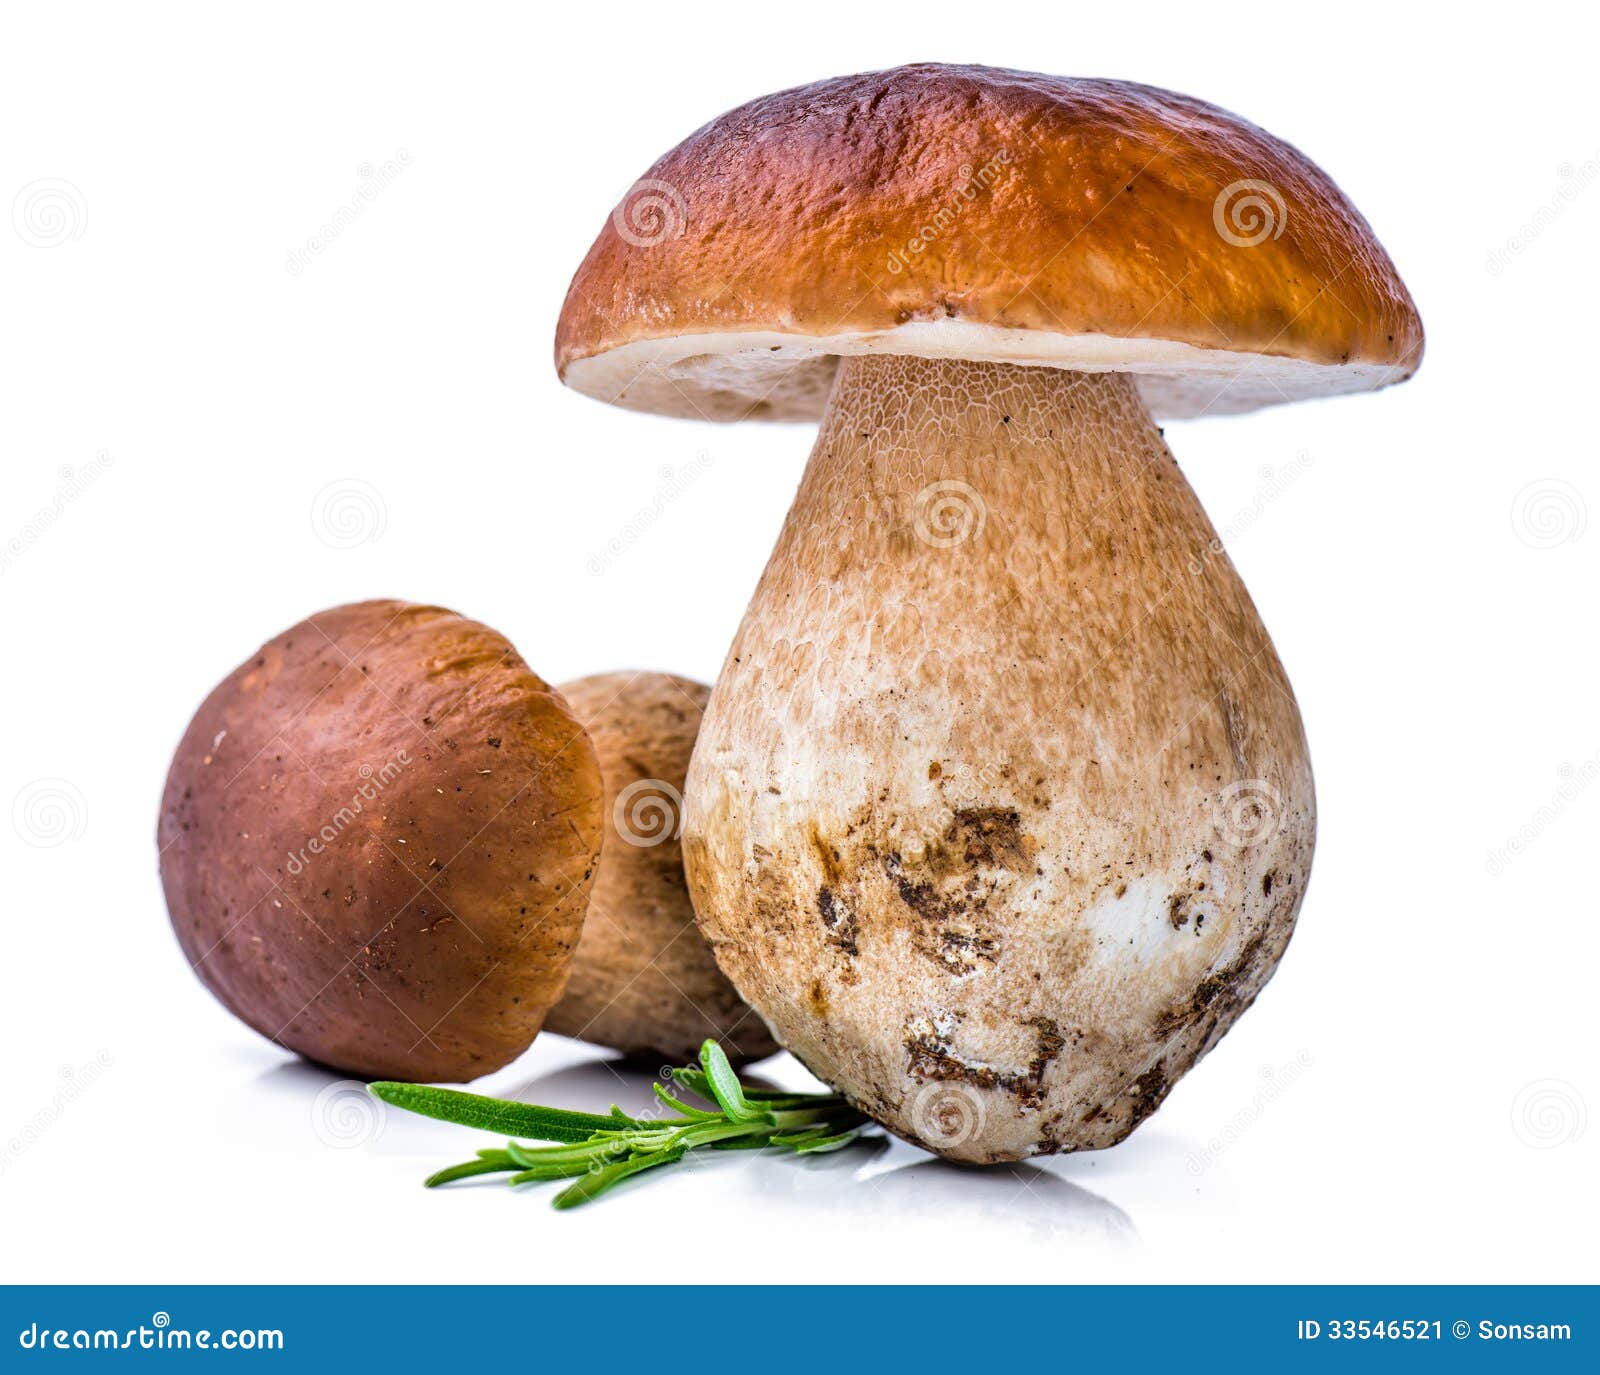 porcini mushroom with rosemary